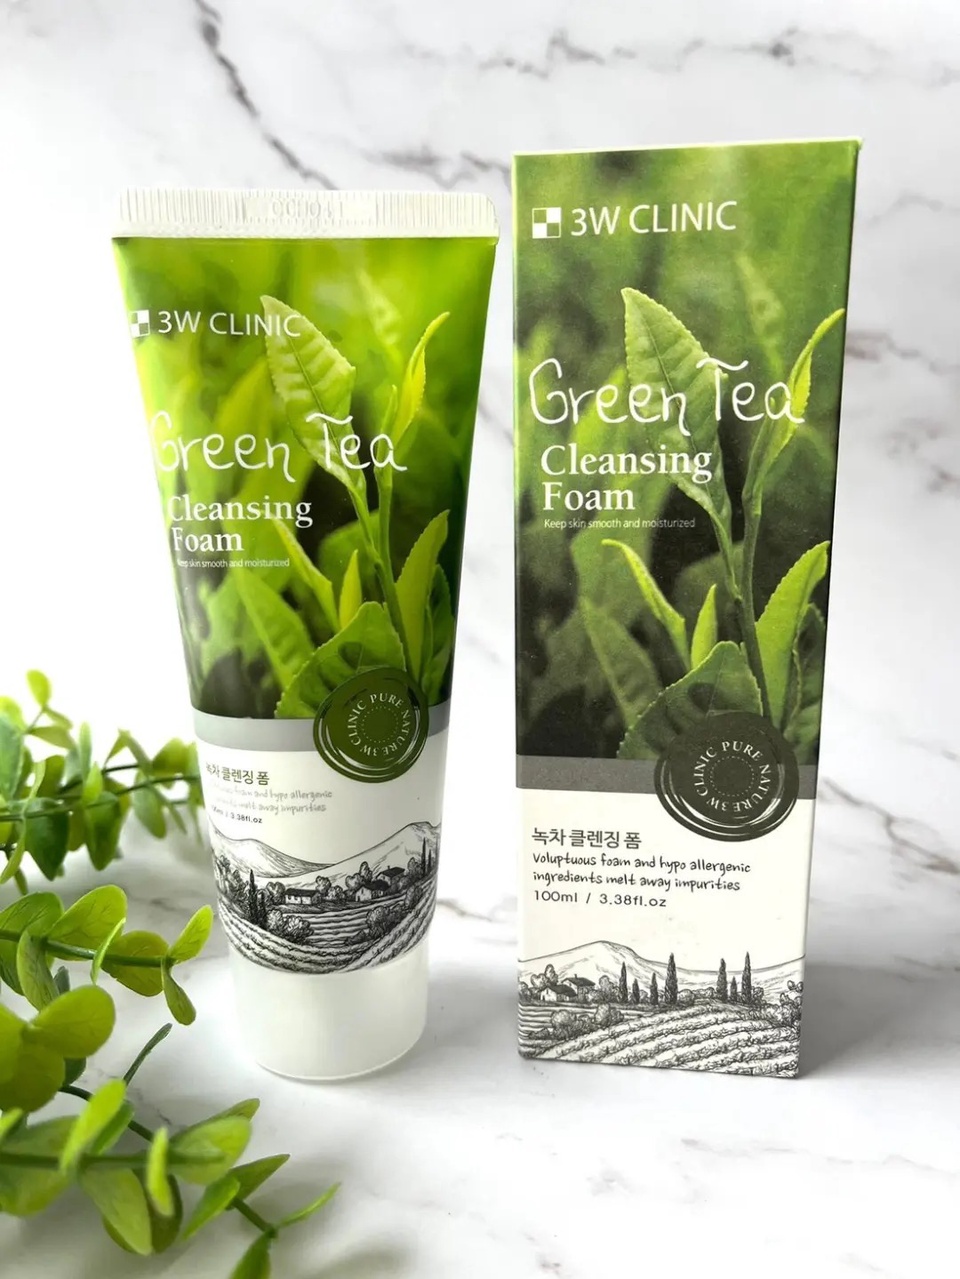 3W Clinic пенка для умывания Green Tea Foam Cleansing, 100 мл - 200 ₽, заказать онлайн.